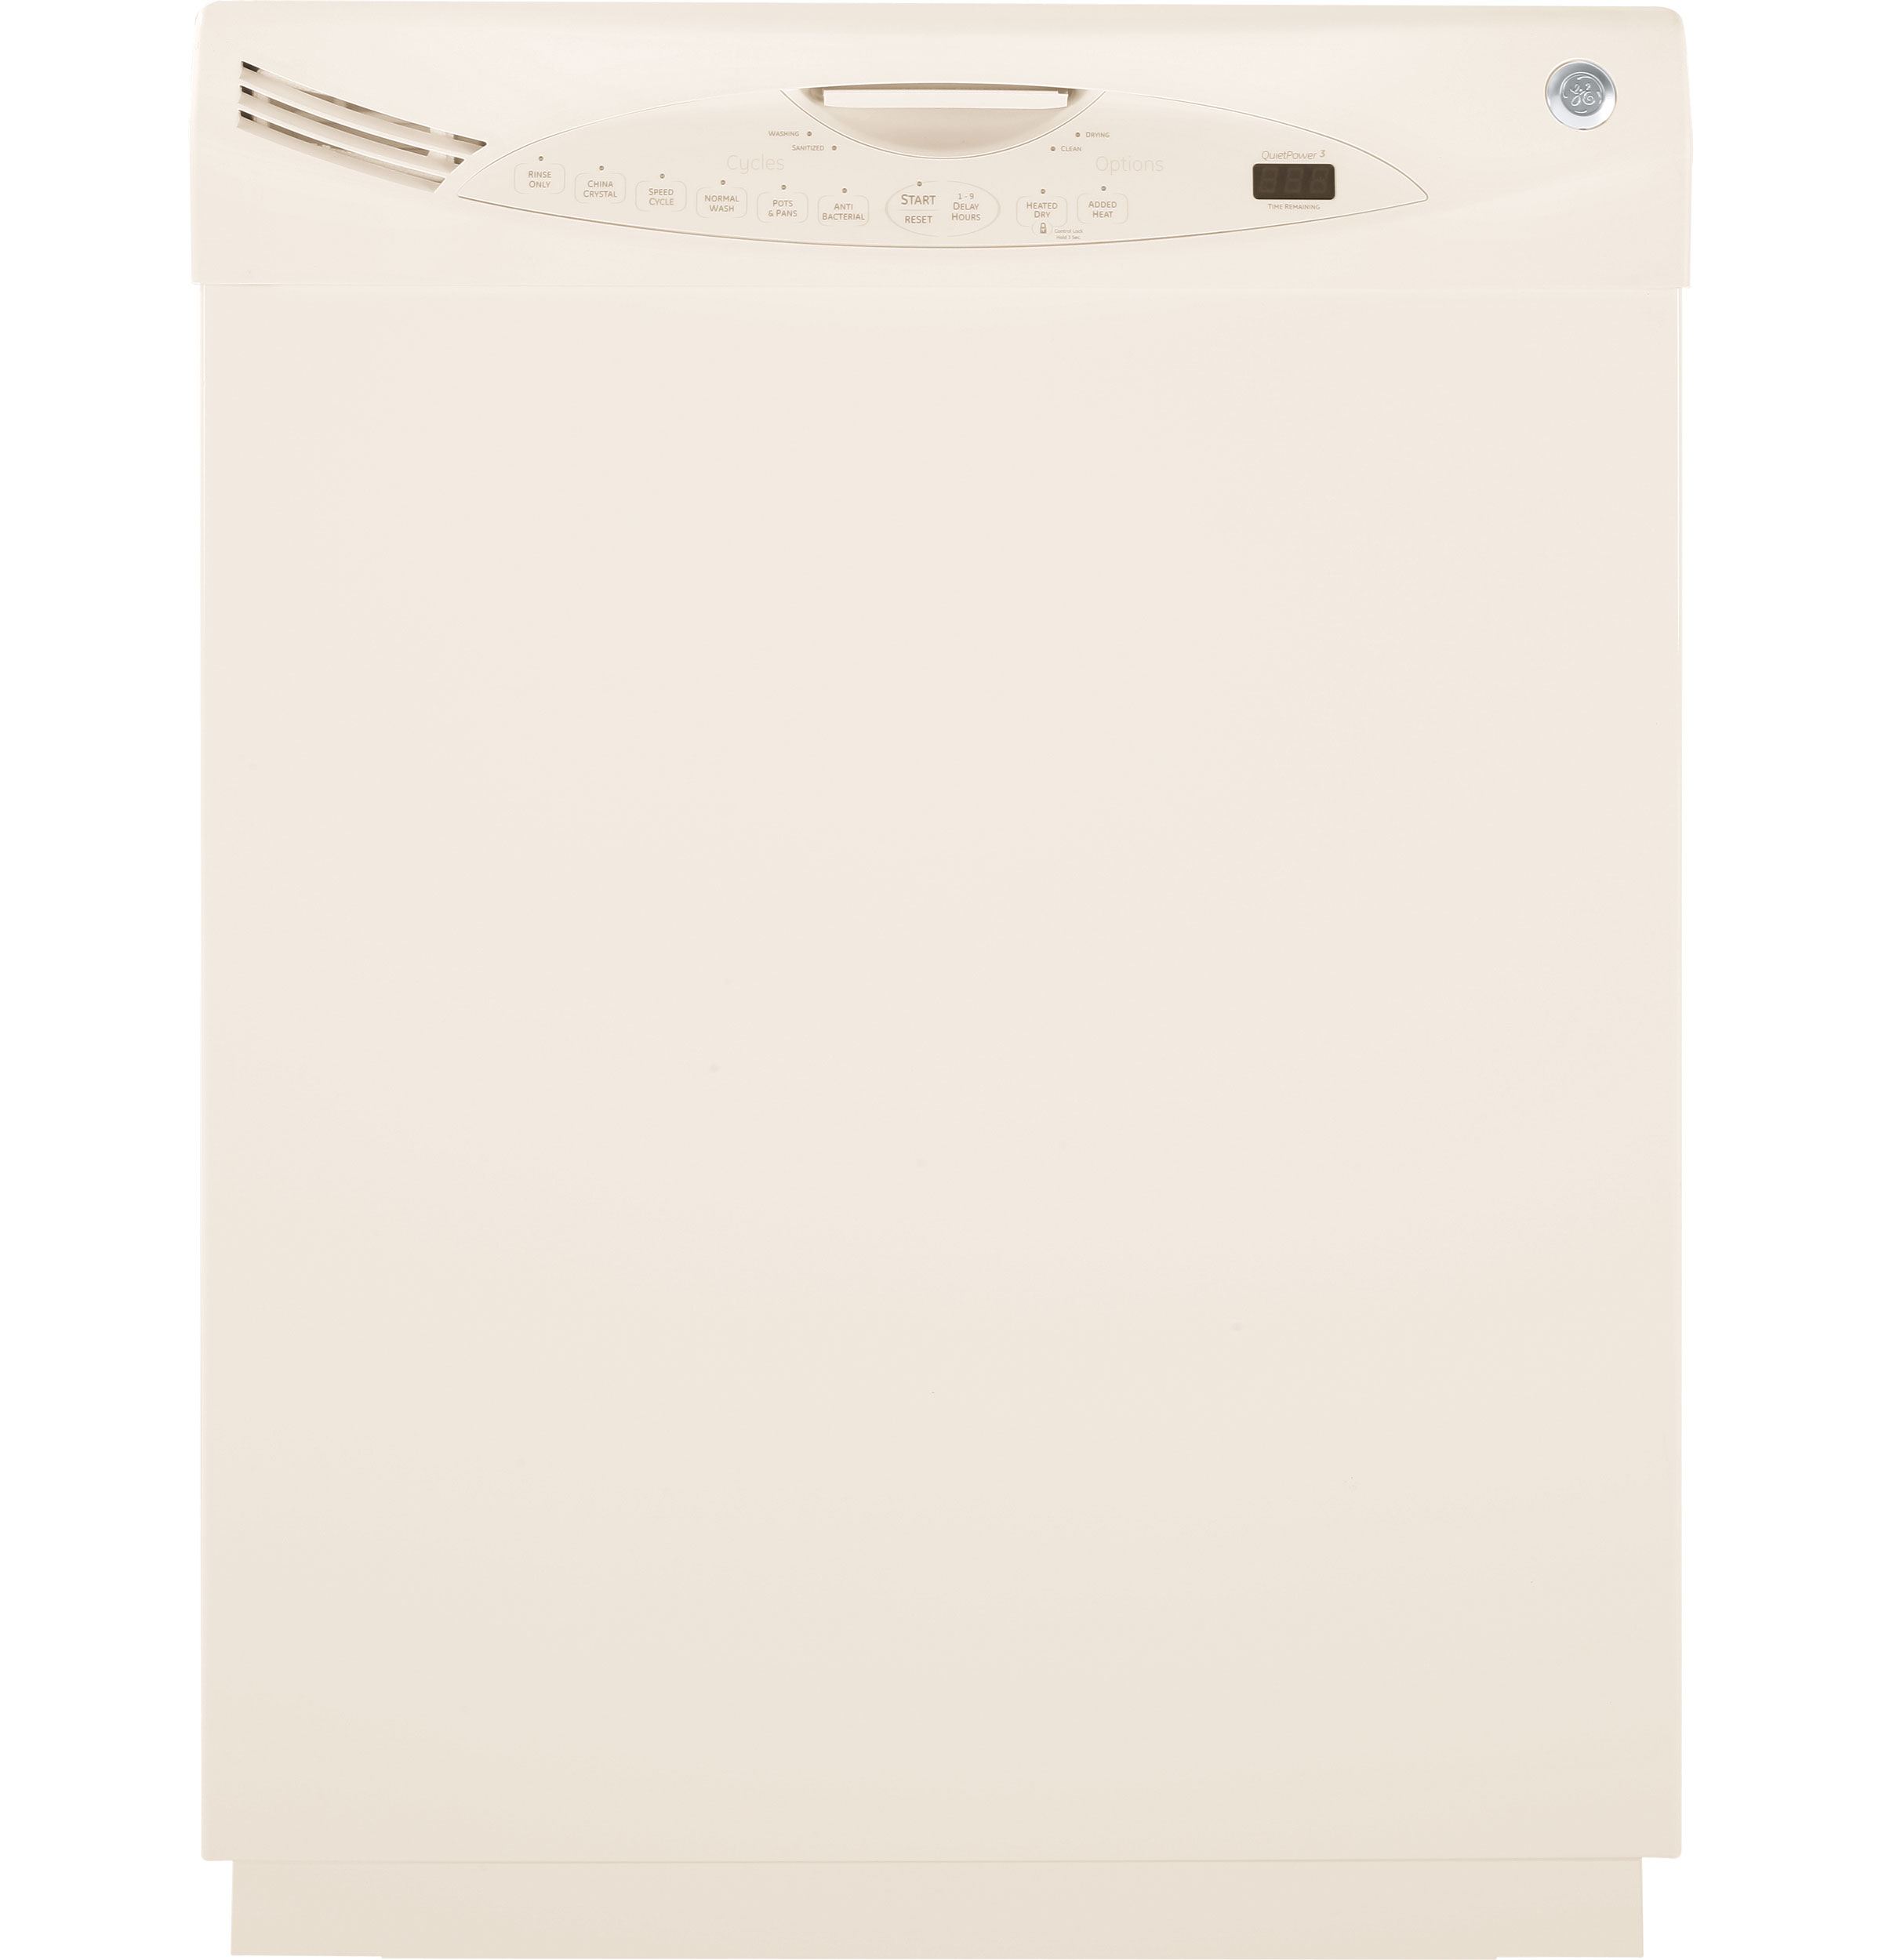 GE® Tall Tub Built-In Dishwasher